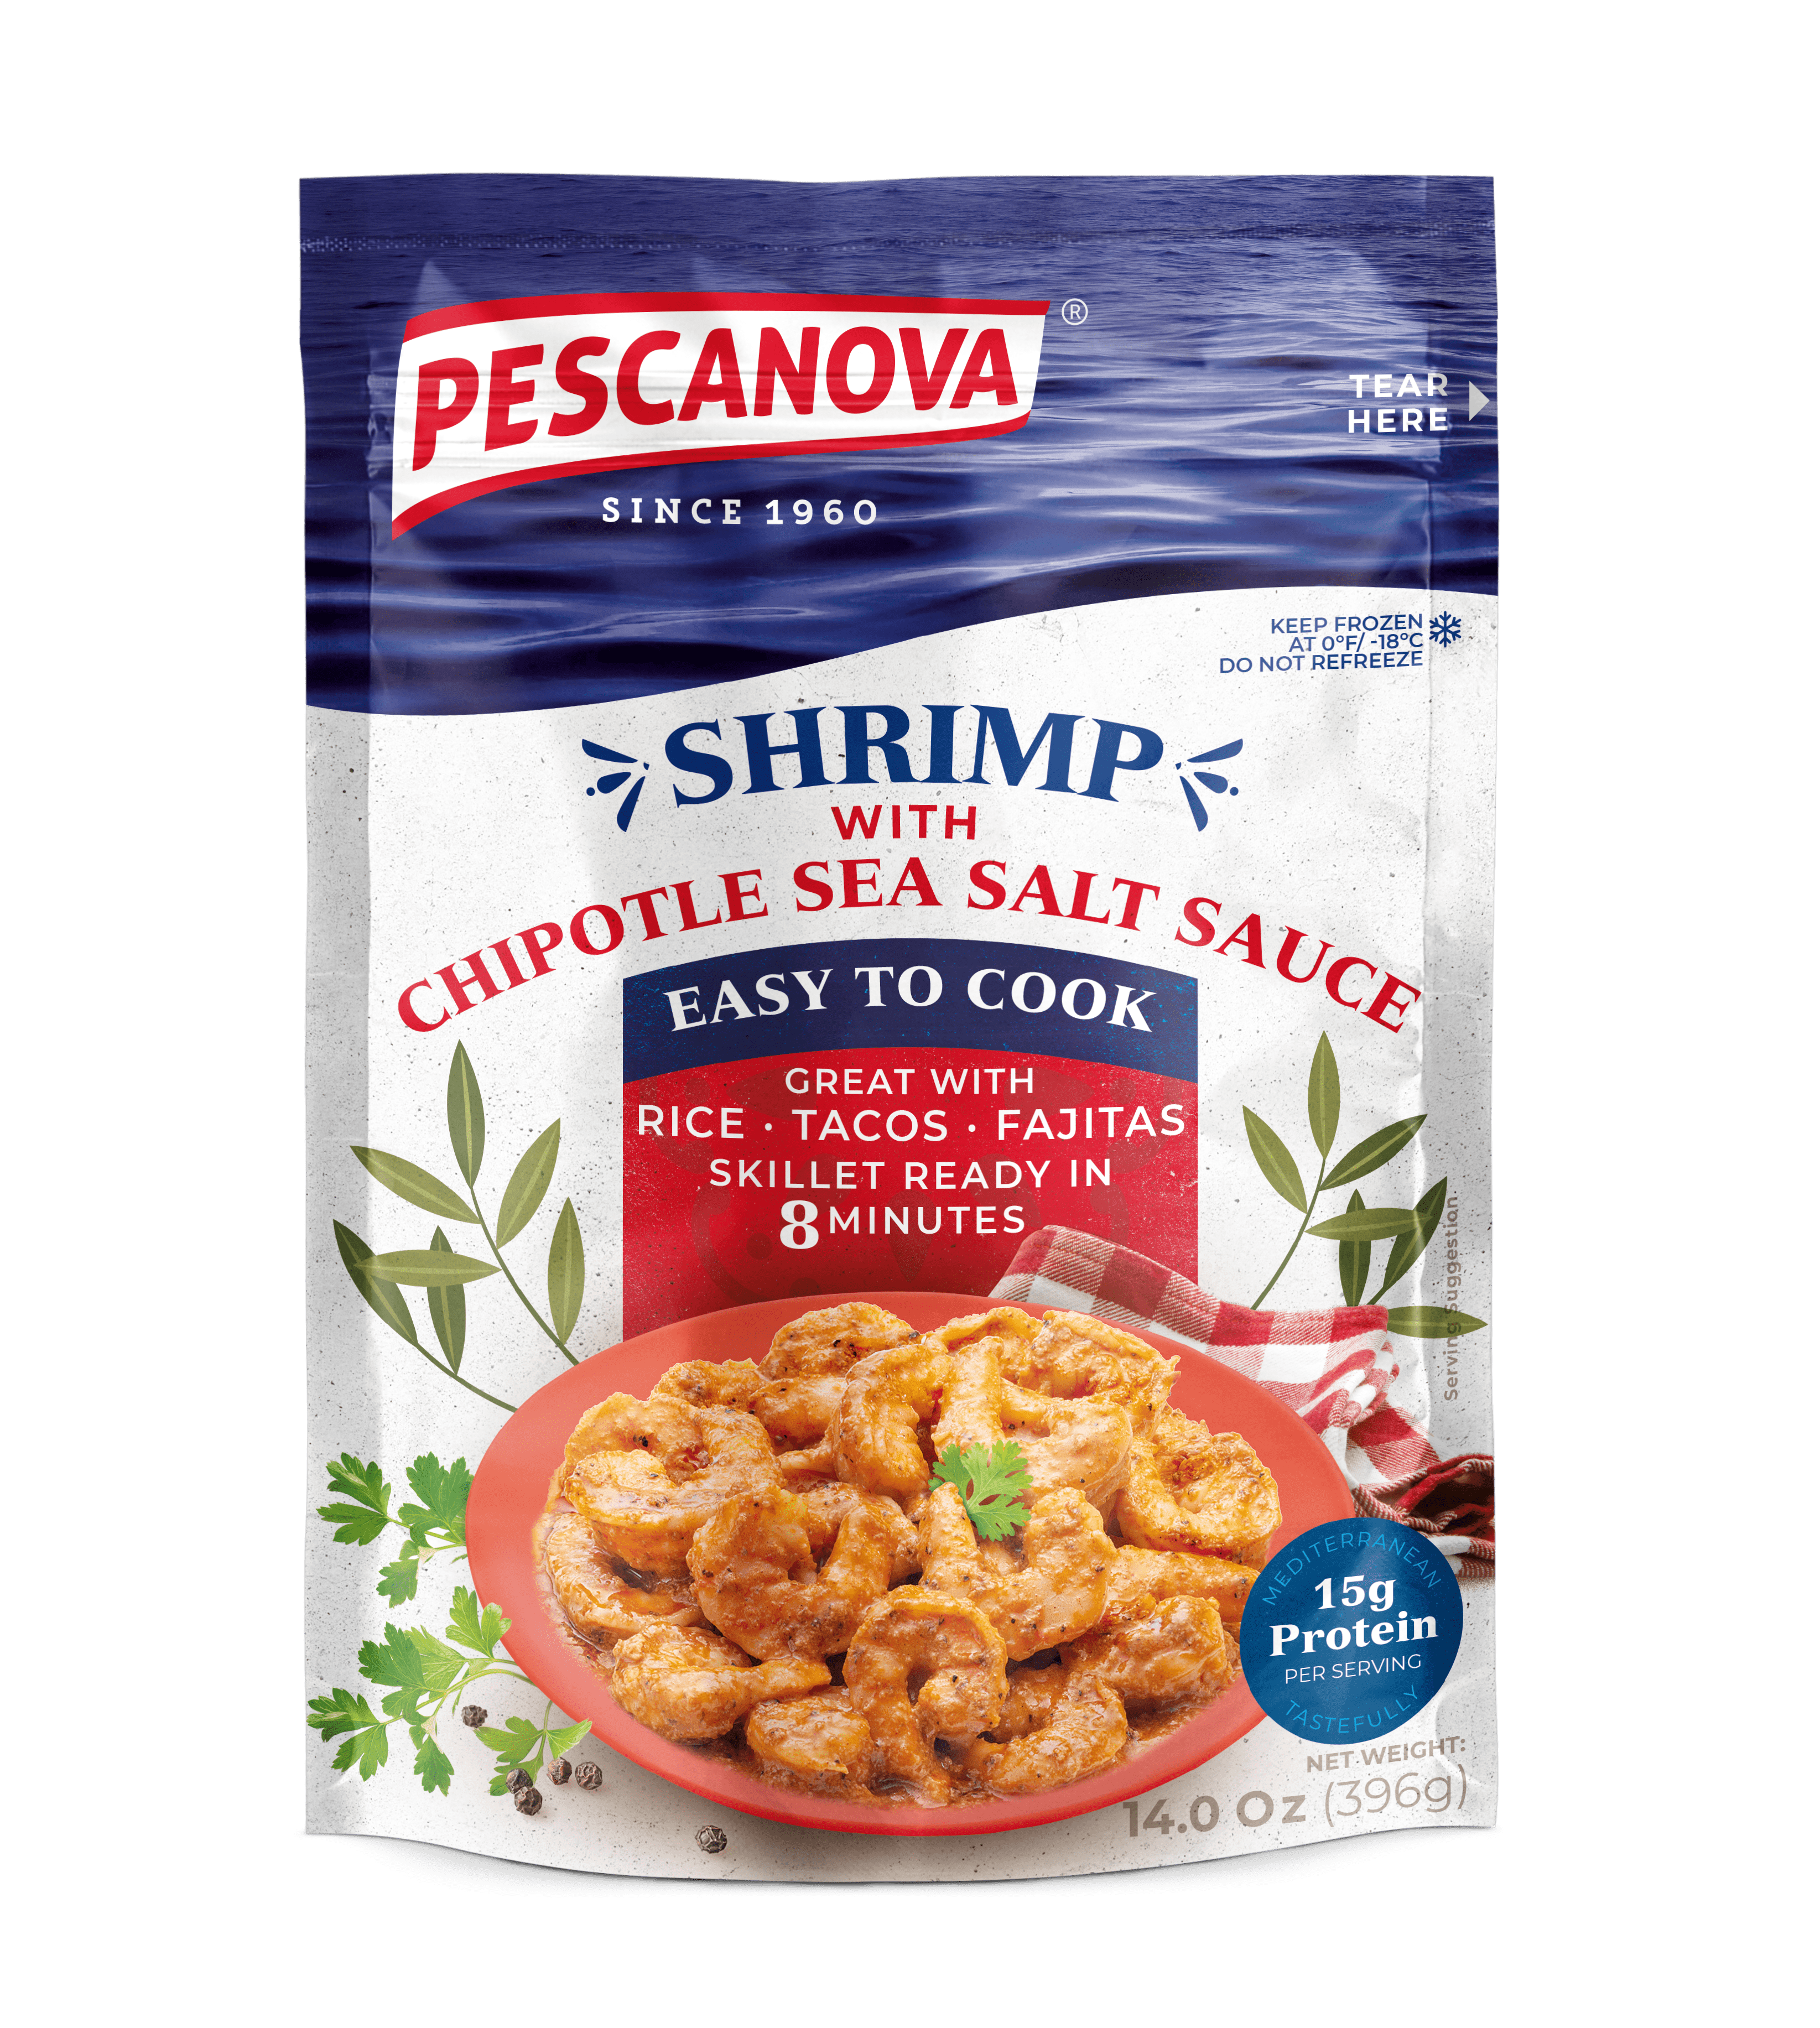 Shrimp with Chipotle Sea Salt Sauce